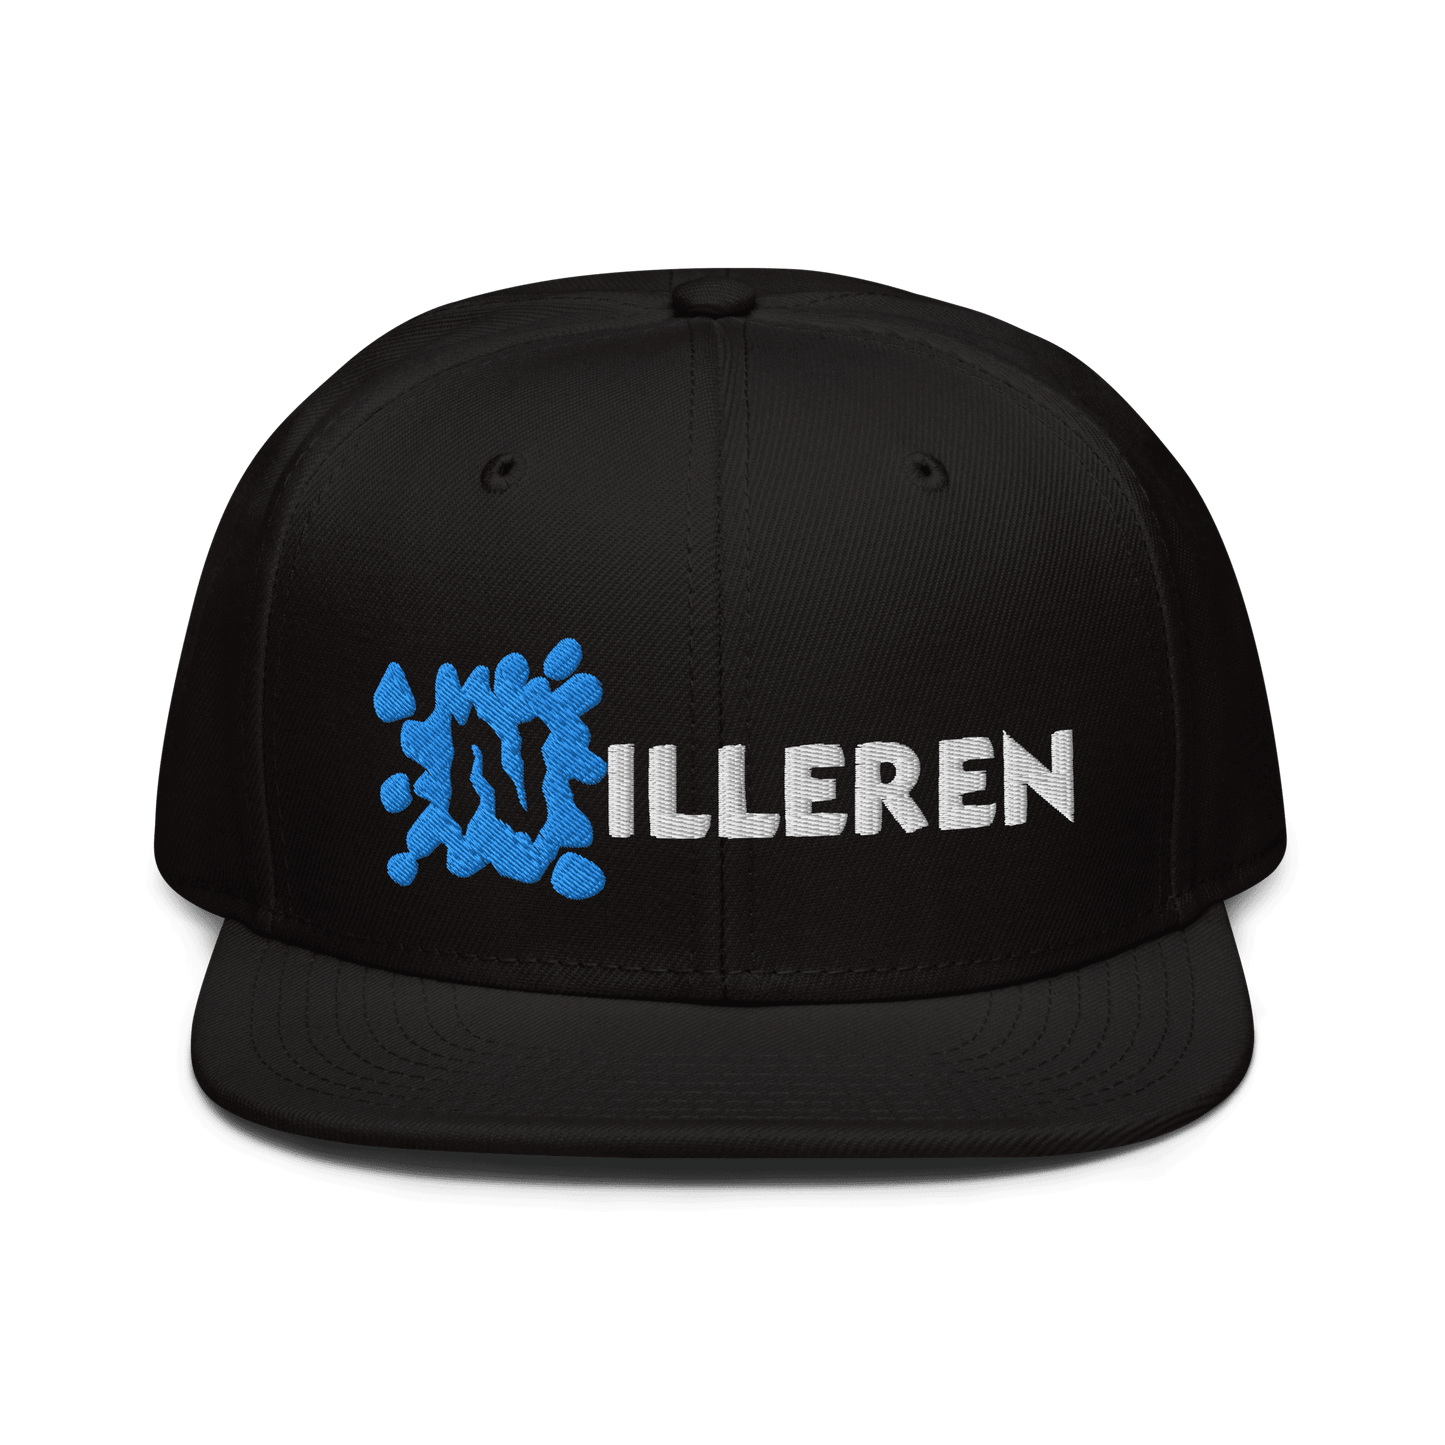 Nilleren_ Snapback Cap: Extended Logo